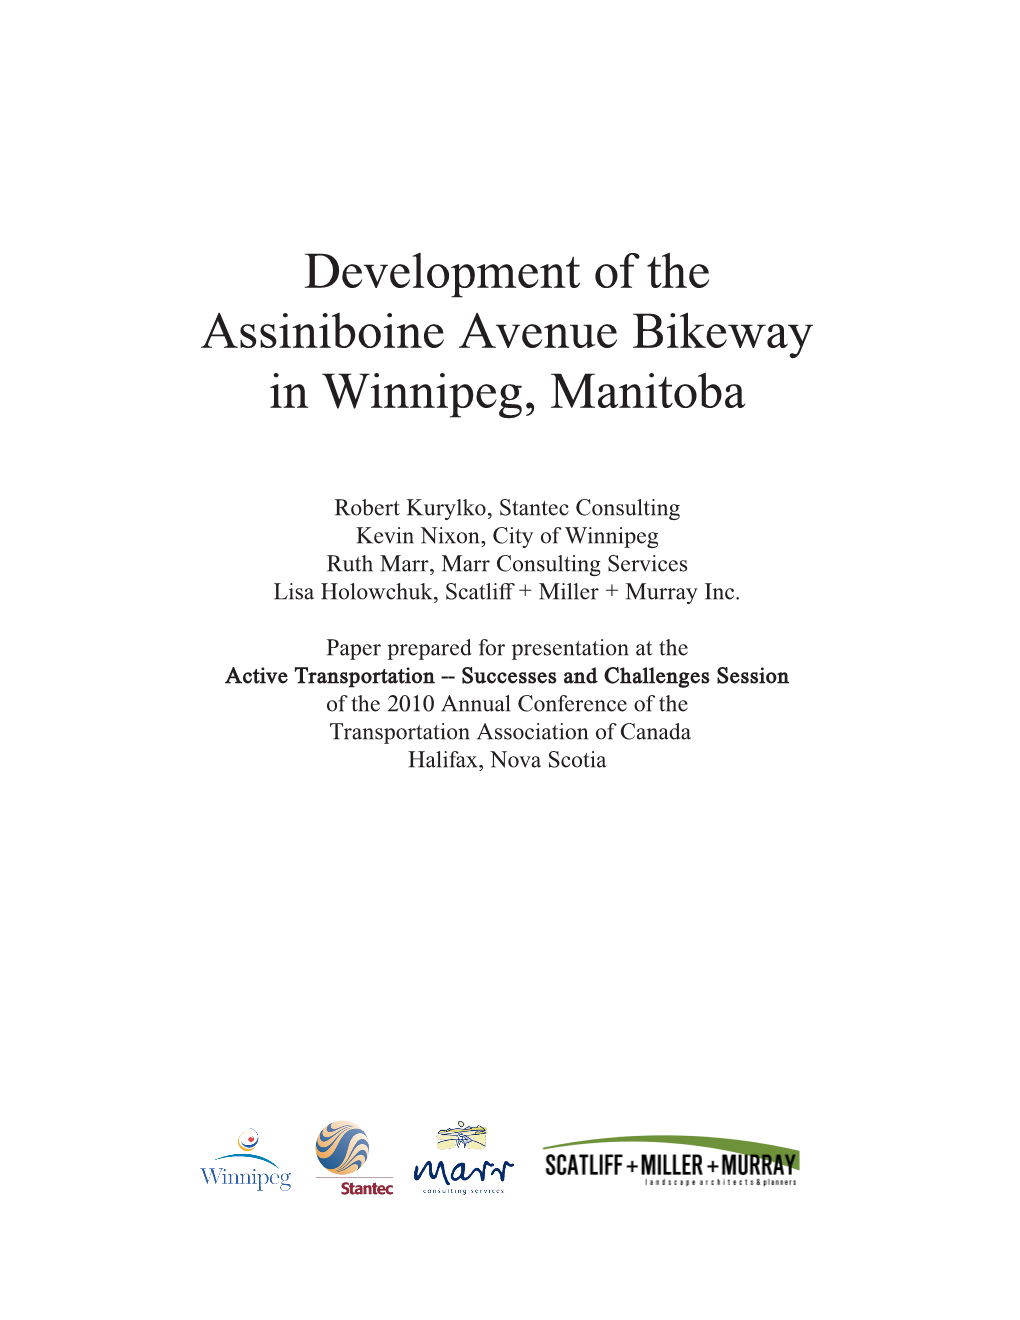 Development of the Assiniboine Avenue Bikeway in Winnipeg, Manitoba